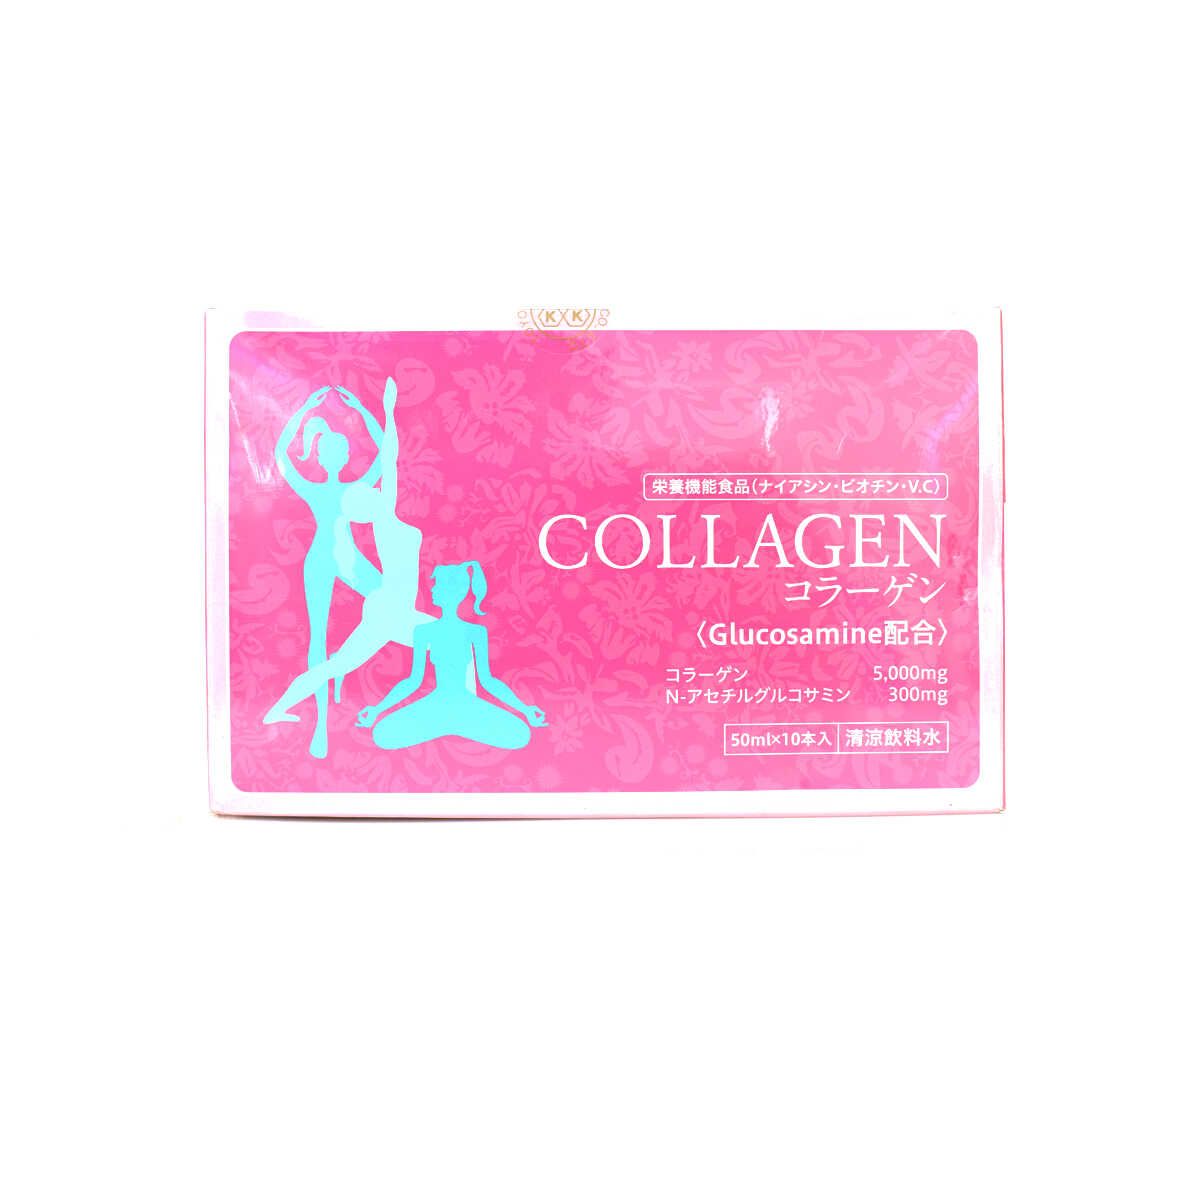 [NHẬT BẢN] Nước Uống Collagen Làm Đẹp Da Toyo Koso Kagaku Collagen Glucosamine